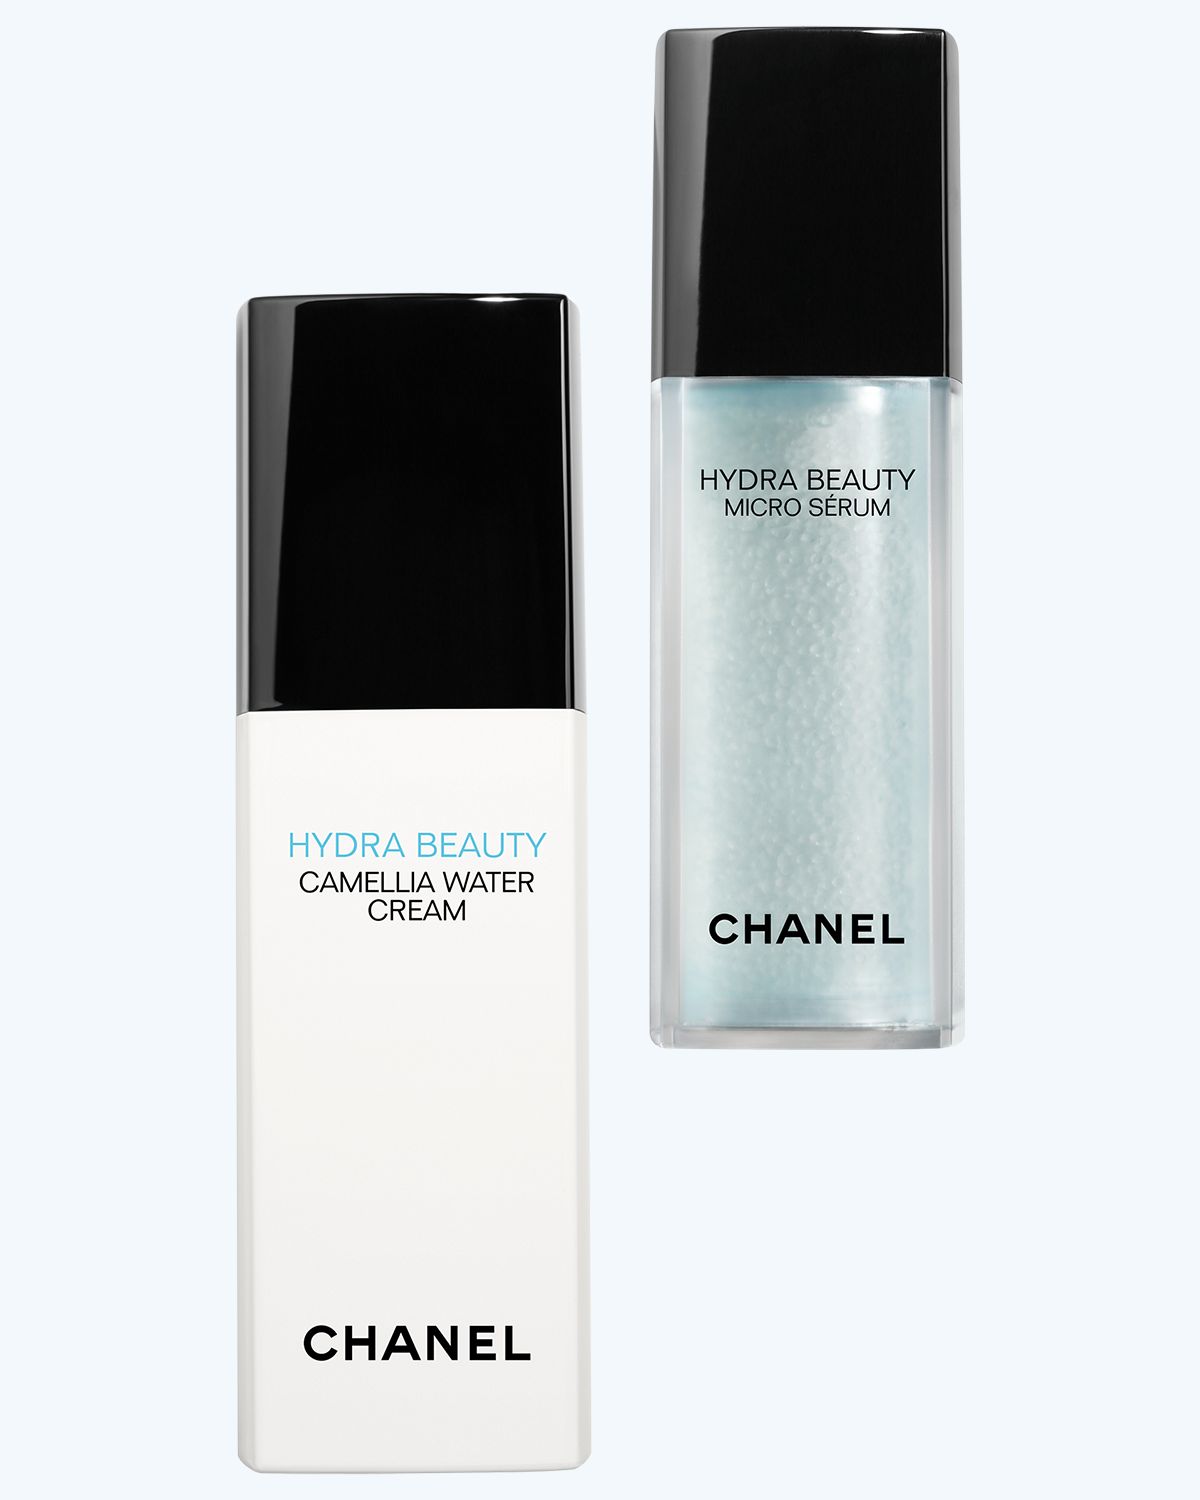 Chanel, Hydra Beauty Camellia Water Cream; Hydra Beauty Micro Sérum